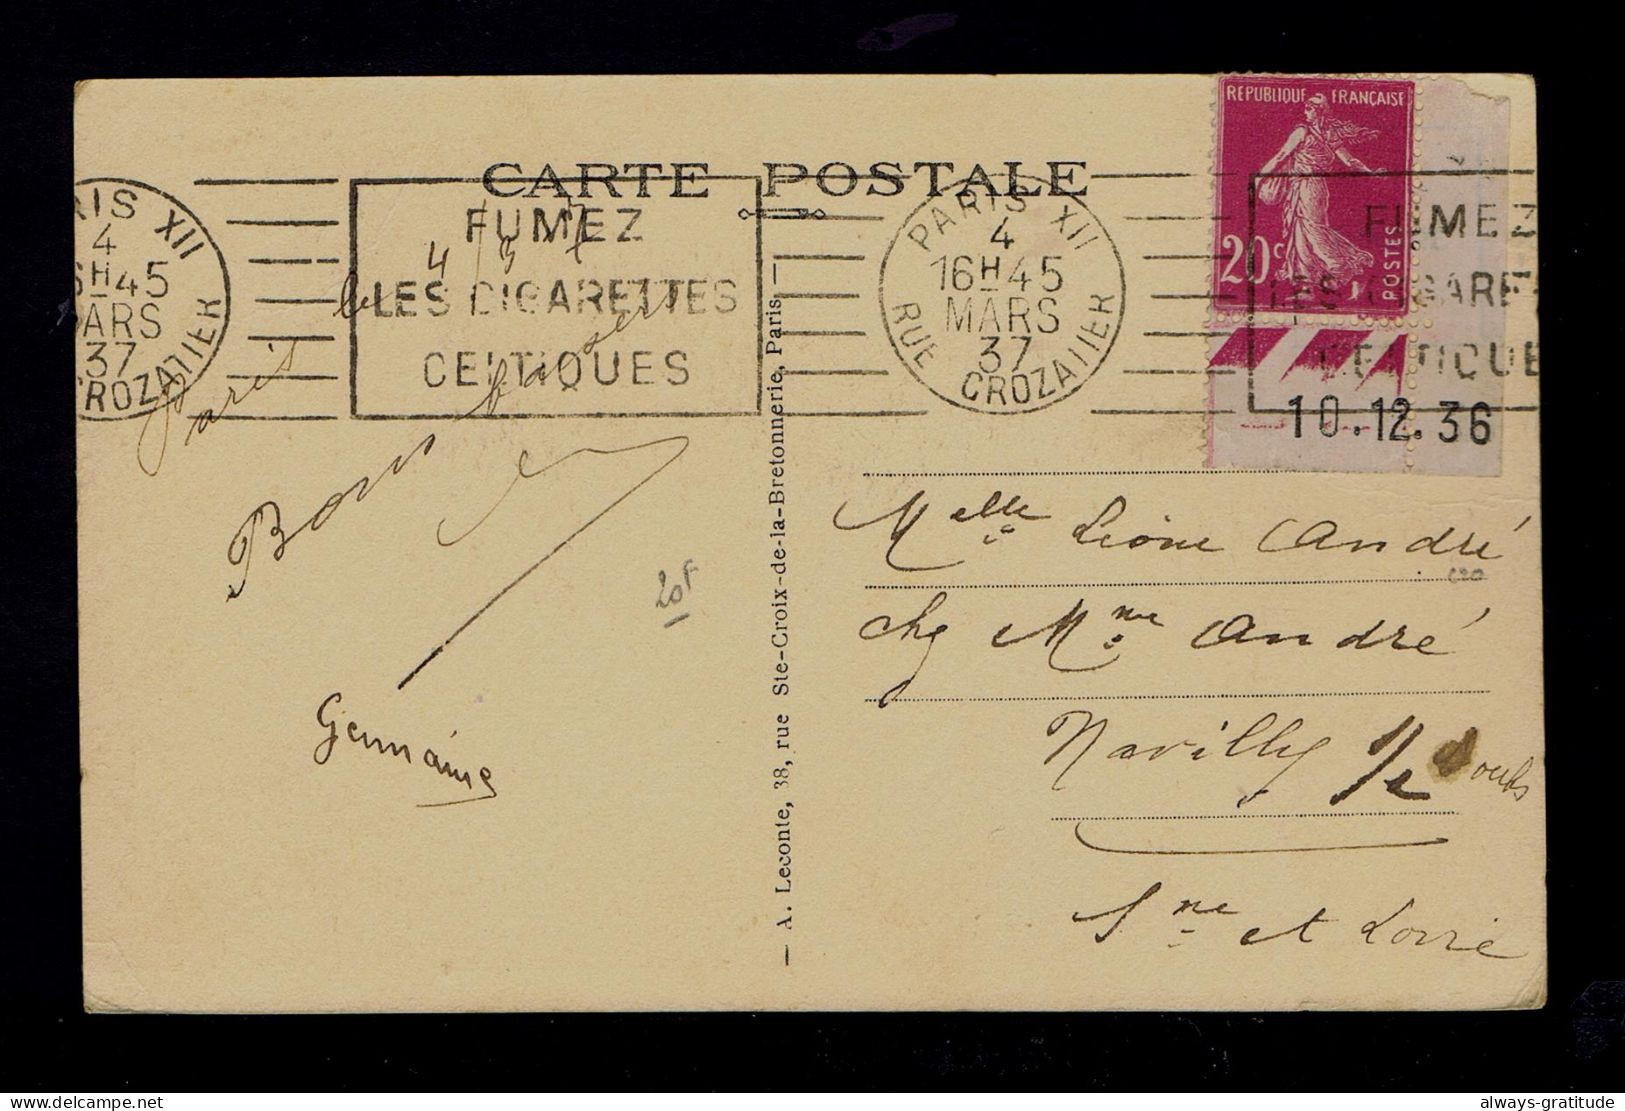 Sp10163 FRANCE Tabac Smoke Tobacco "fumes Les Cigarettes Celtiques" Mailed 1937 Slogan Pmk Postcard Paris »Navilly - Tabaco